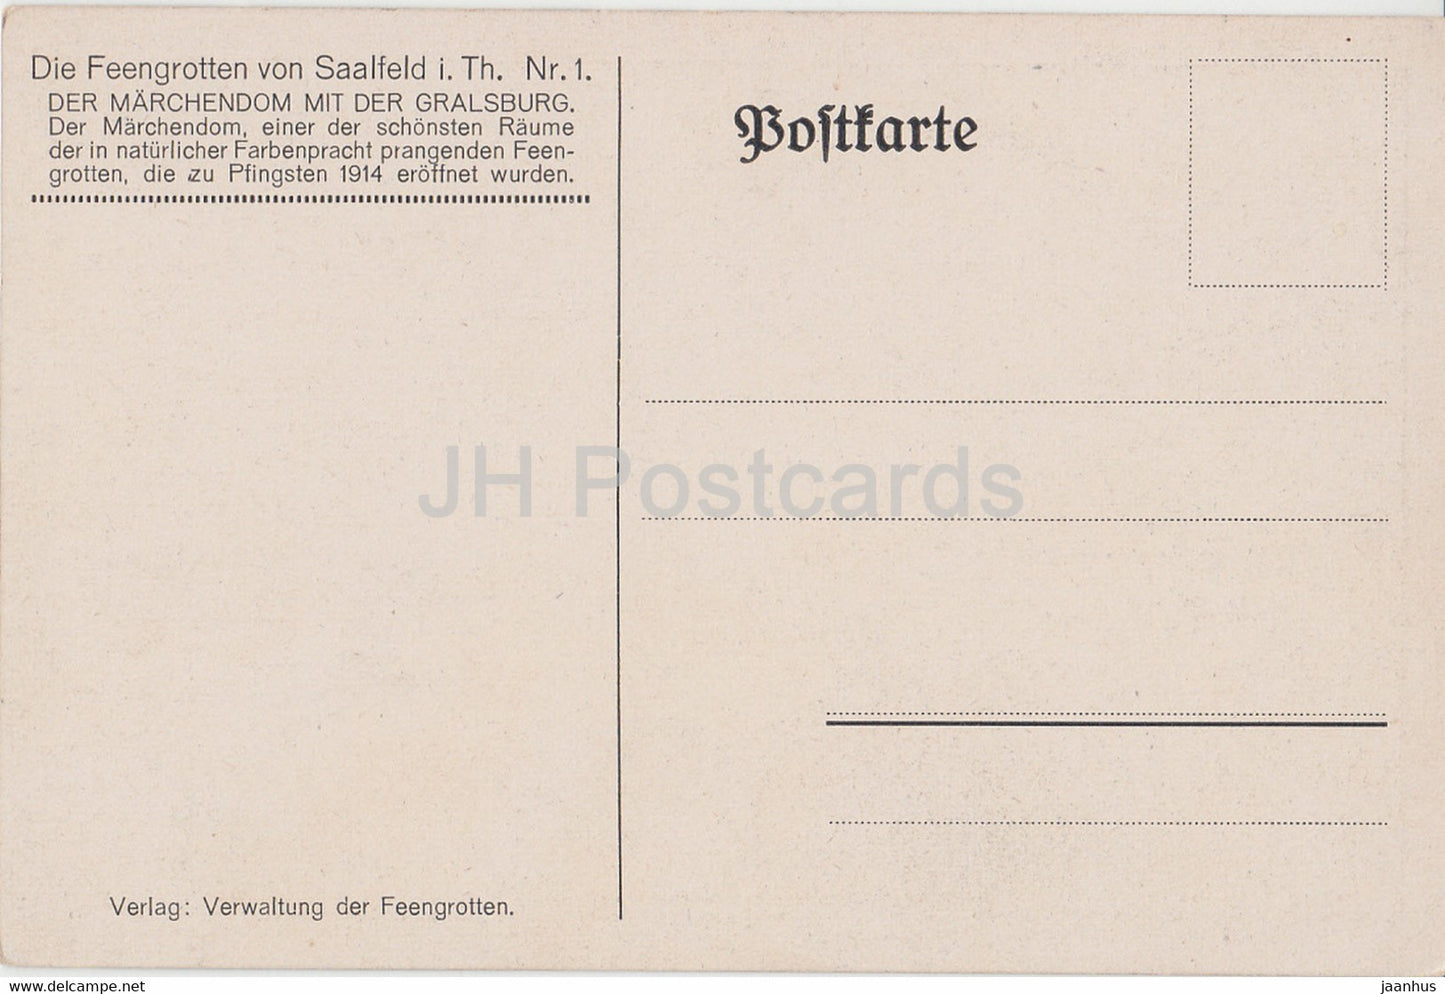 Feengrotten von Saalfeld in Th - Marchendom - cave - 1 - old postcard - Germany - unused